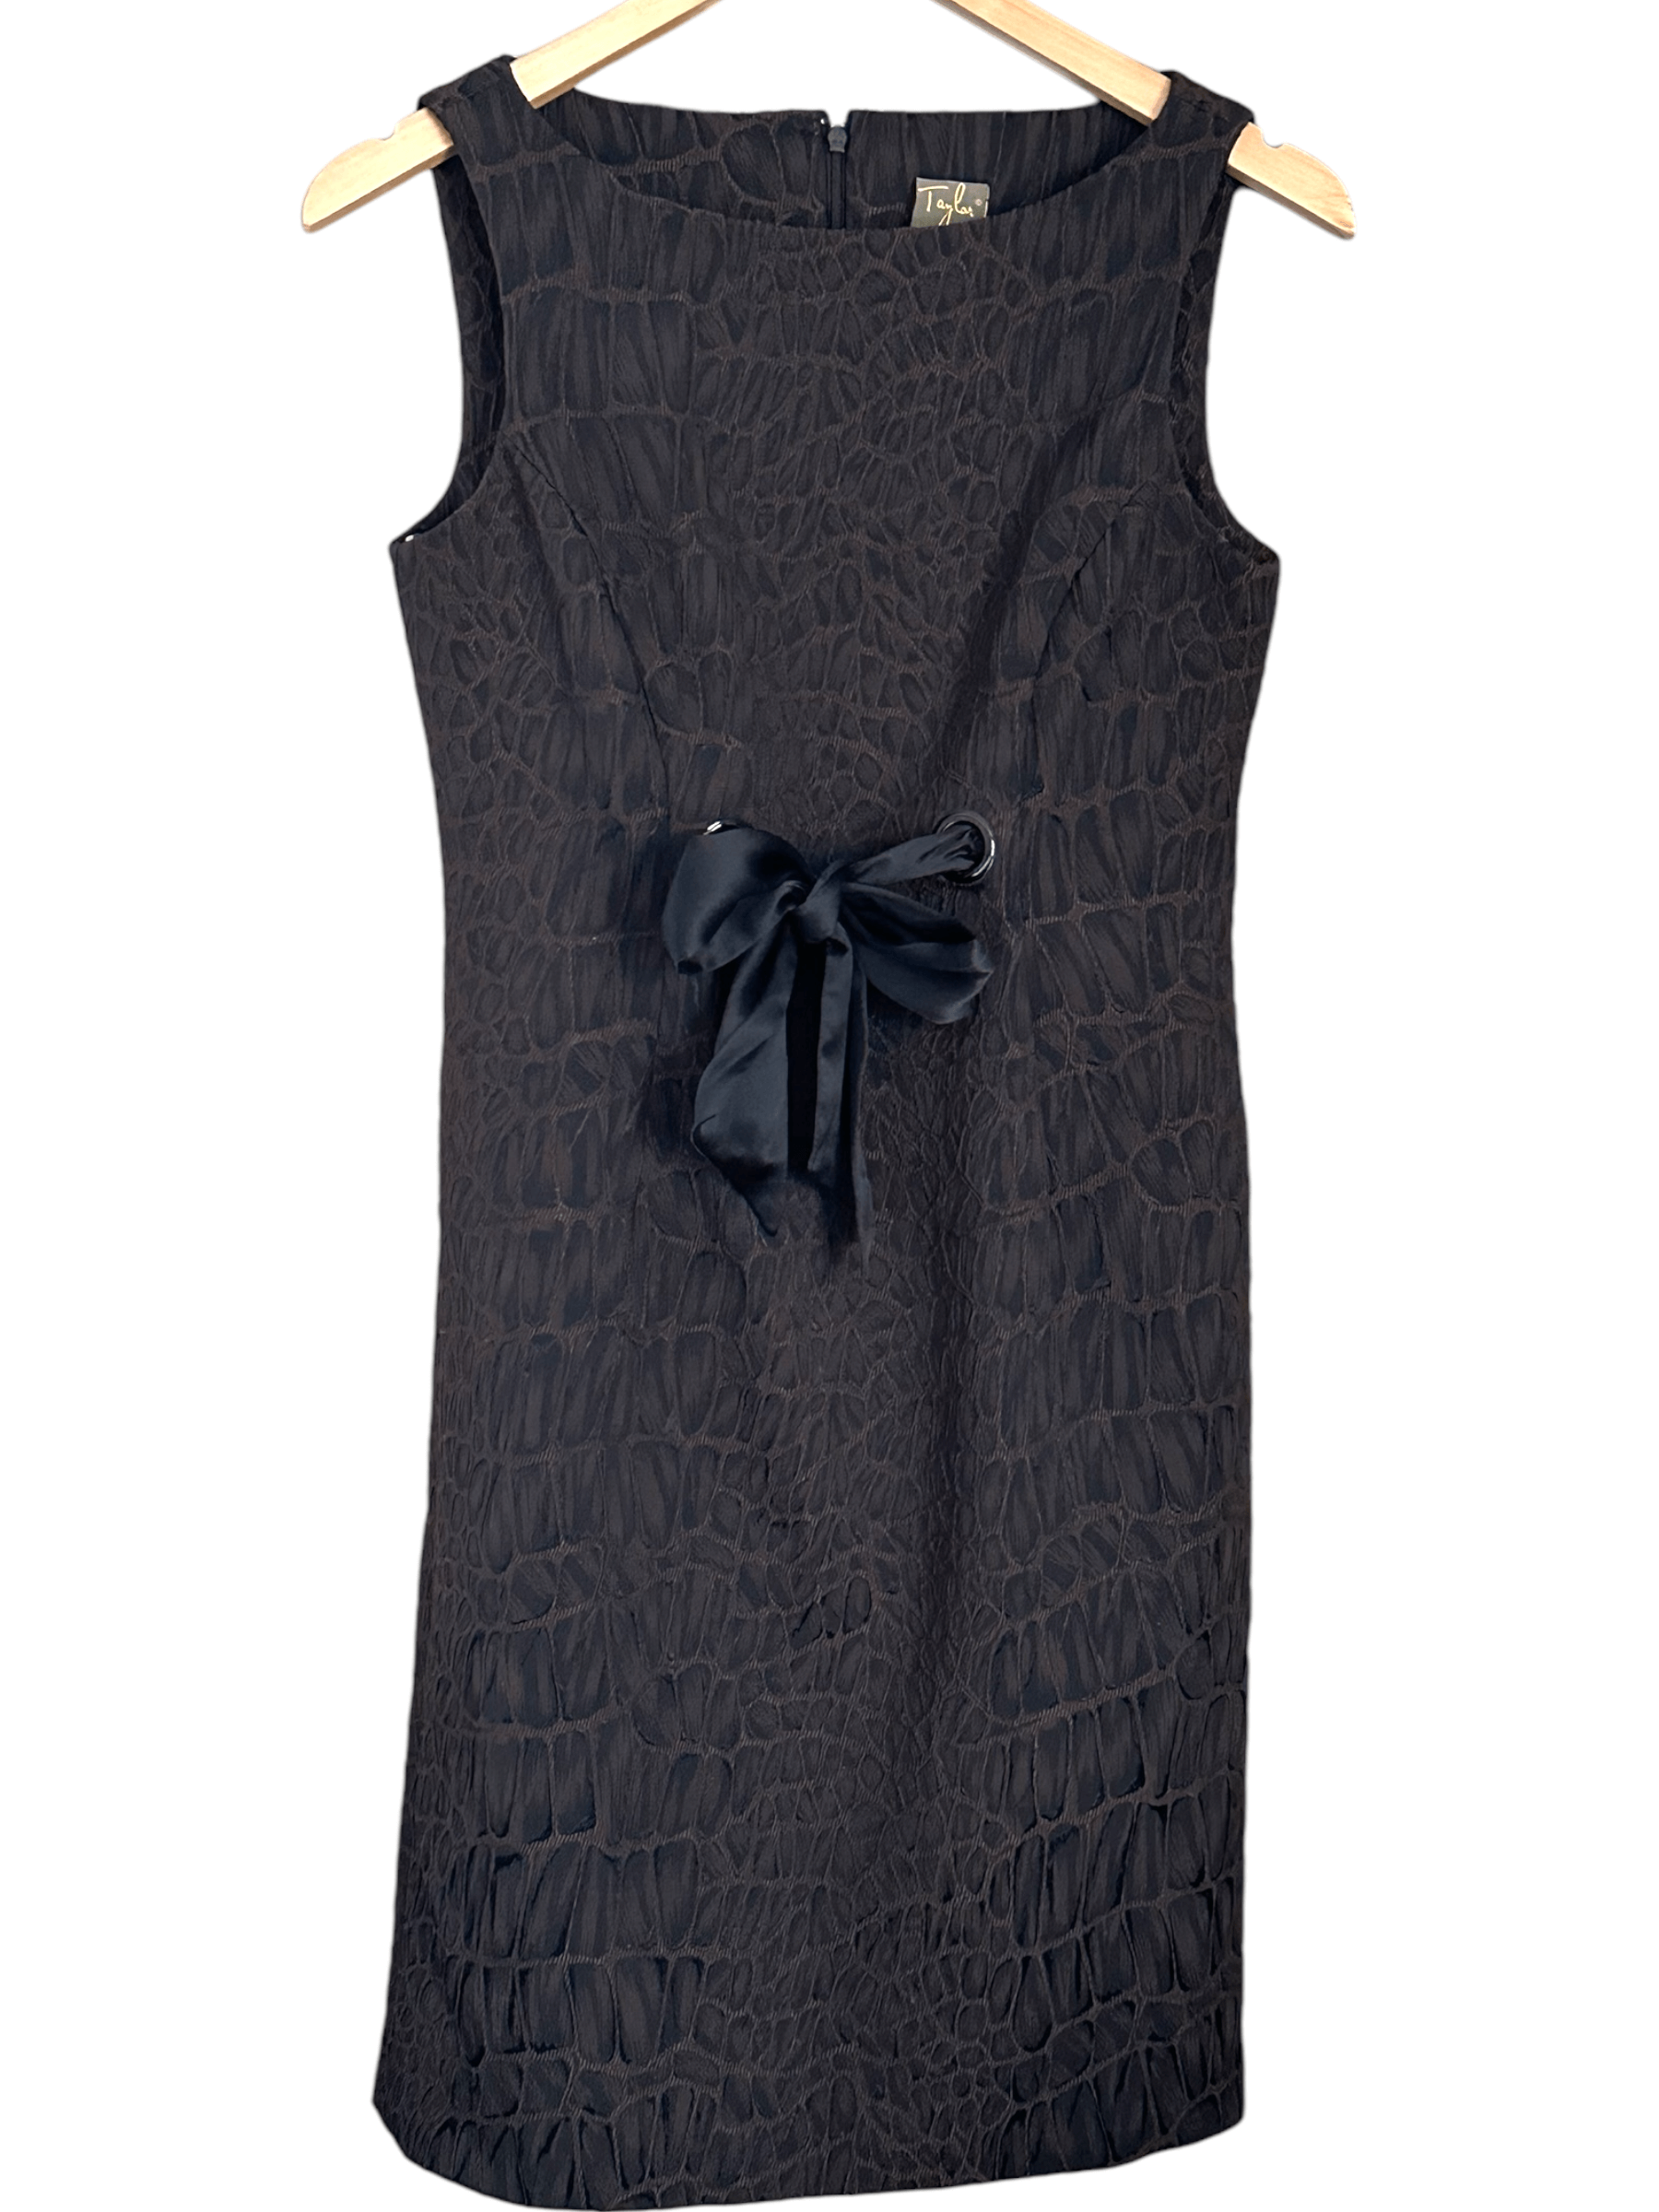 Cool Winter TAYLOR brown texture print sleeveless sheath dress